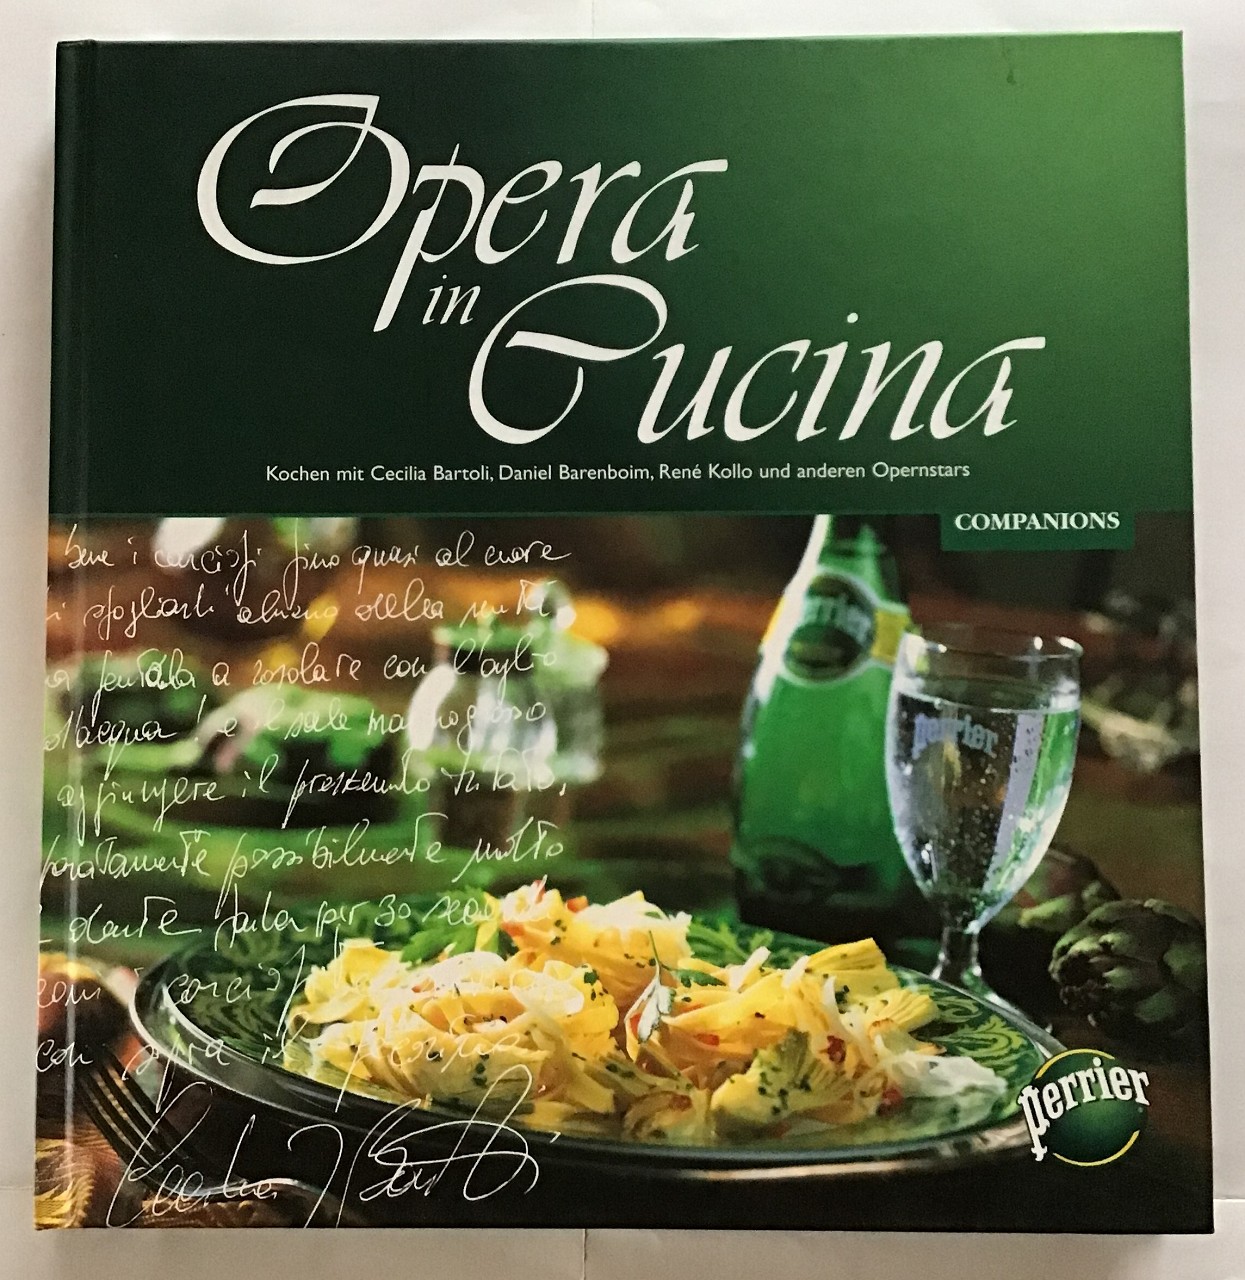 Opera in cucina : Kochen mit Cecilia Bartoli, Daniel Barenboim, René Kollo und anderen Opernstars. - Rüffer, Theodor